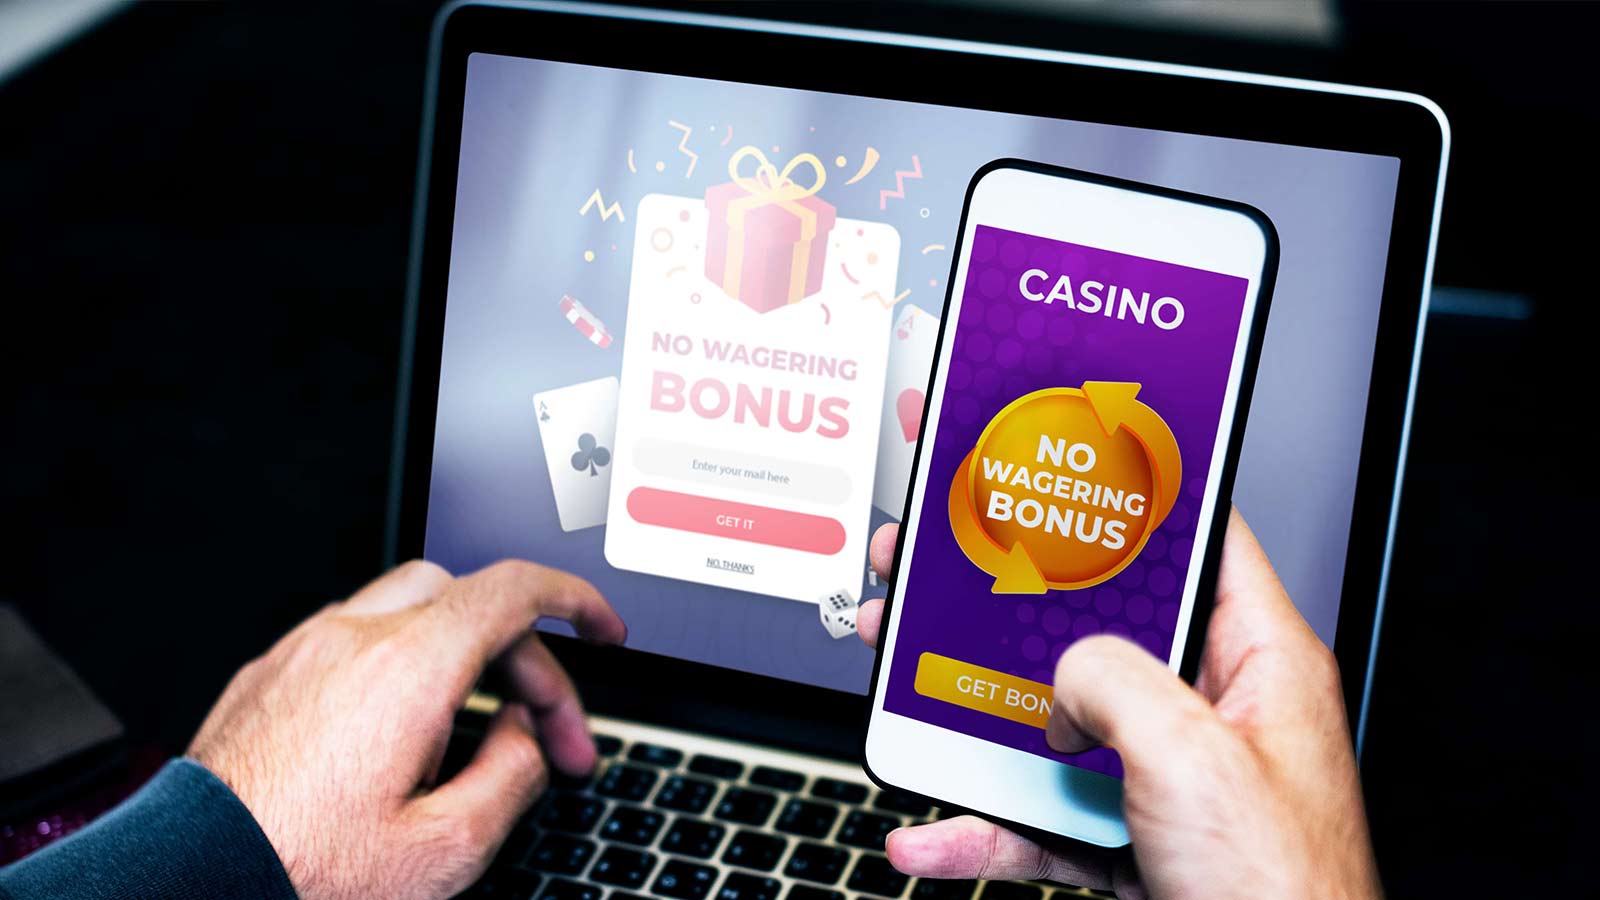 Do many casinos offer no wagering bonuses